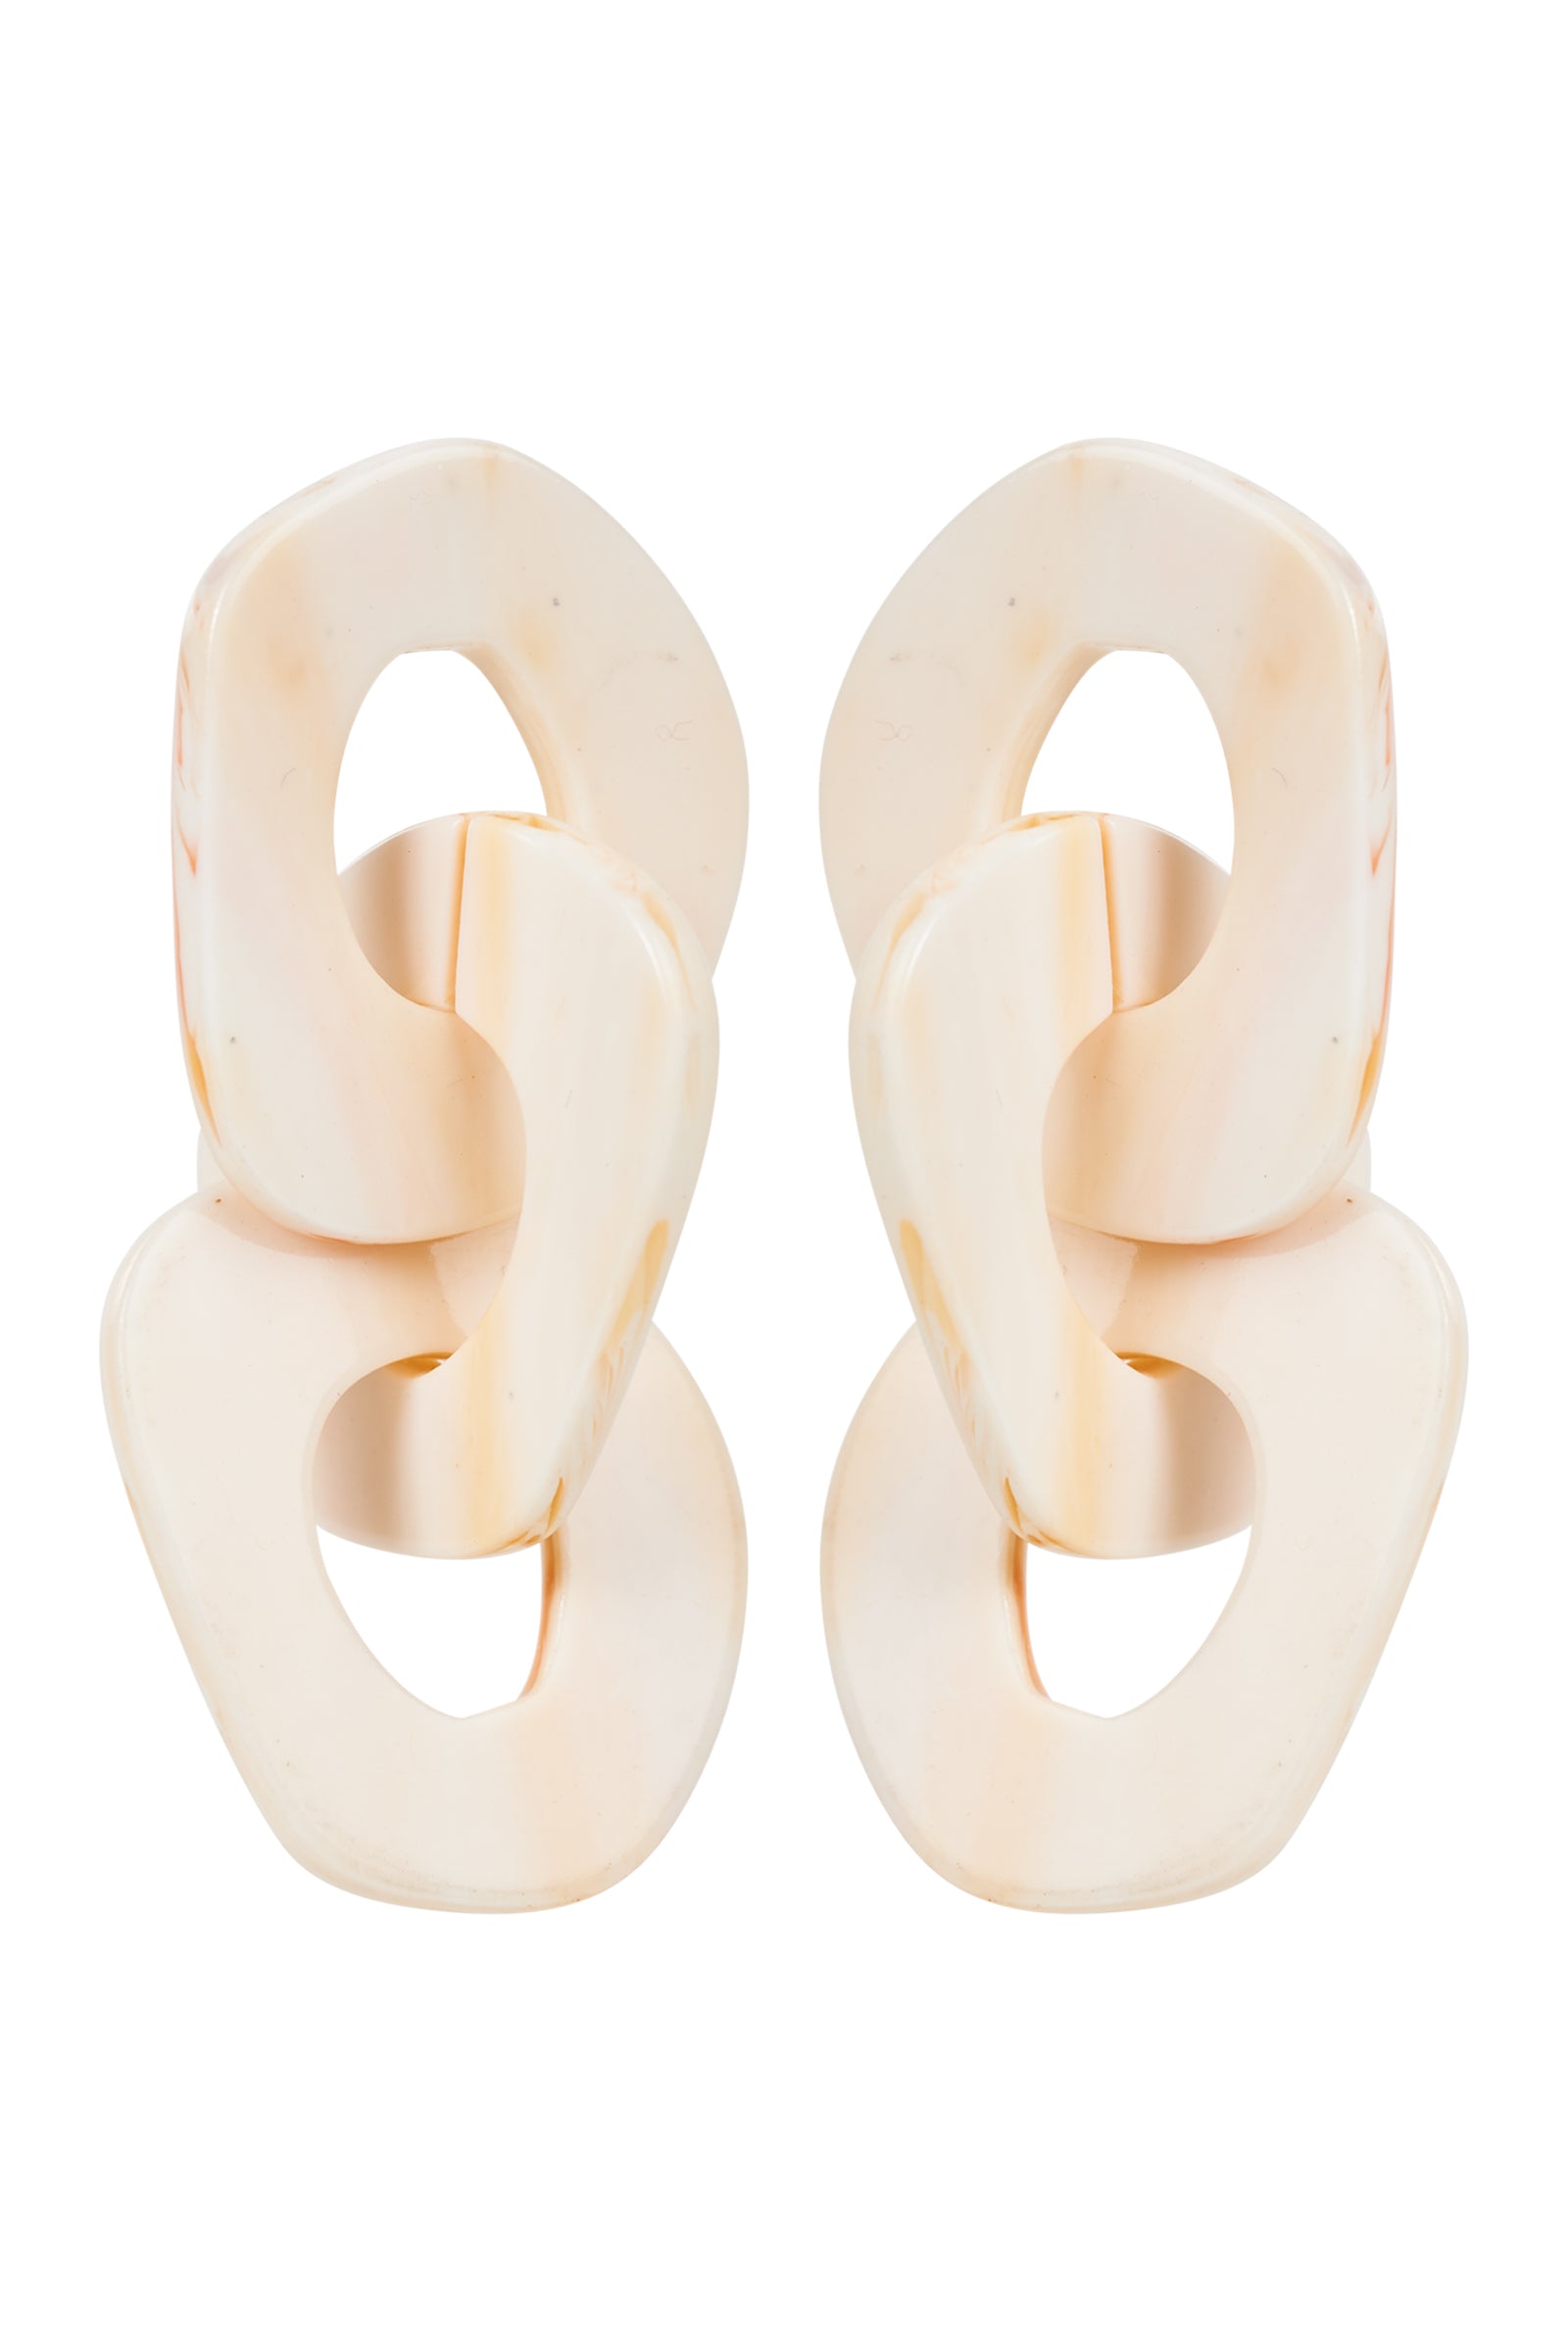 Nama Link Earring - Vanilla - eb&ive Earring